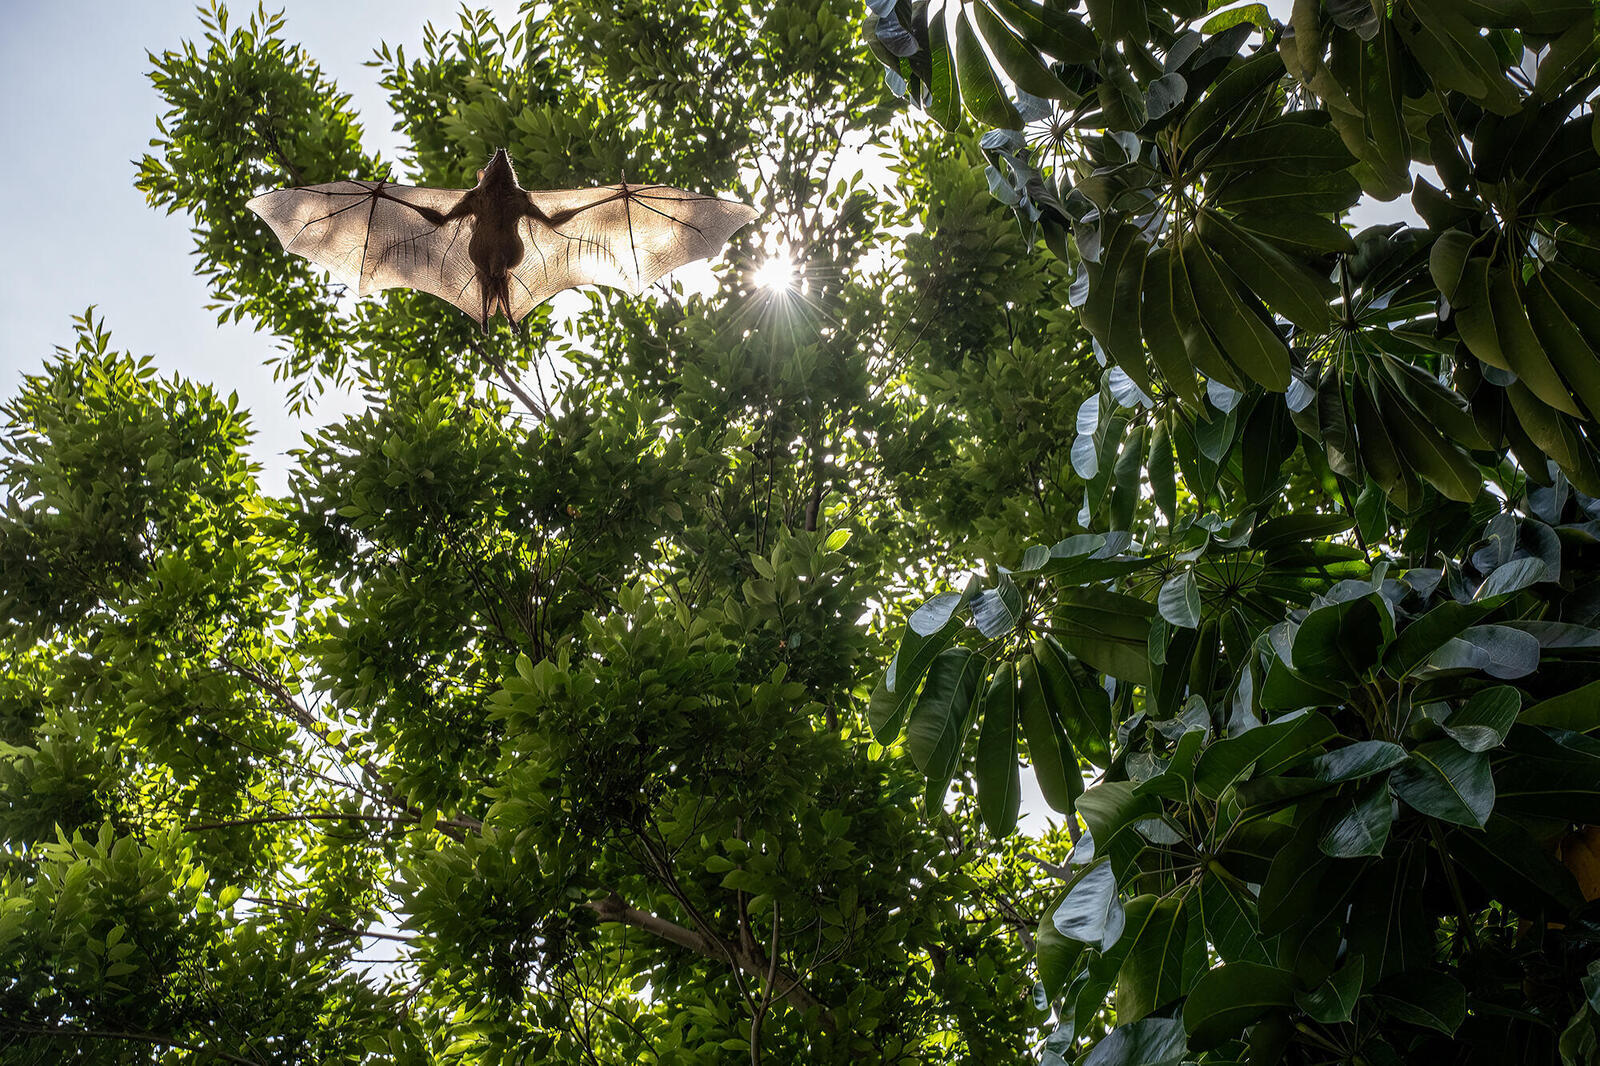 Bat flying in tree canopy